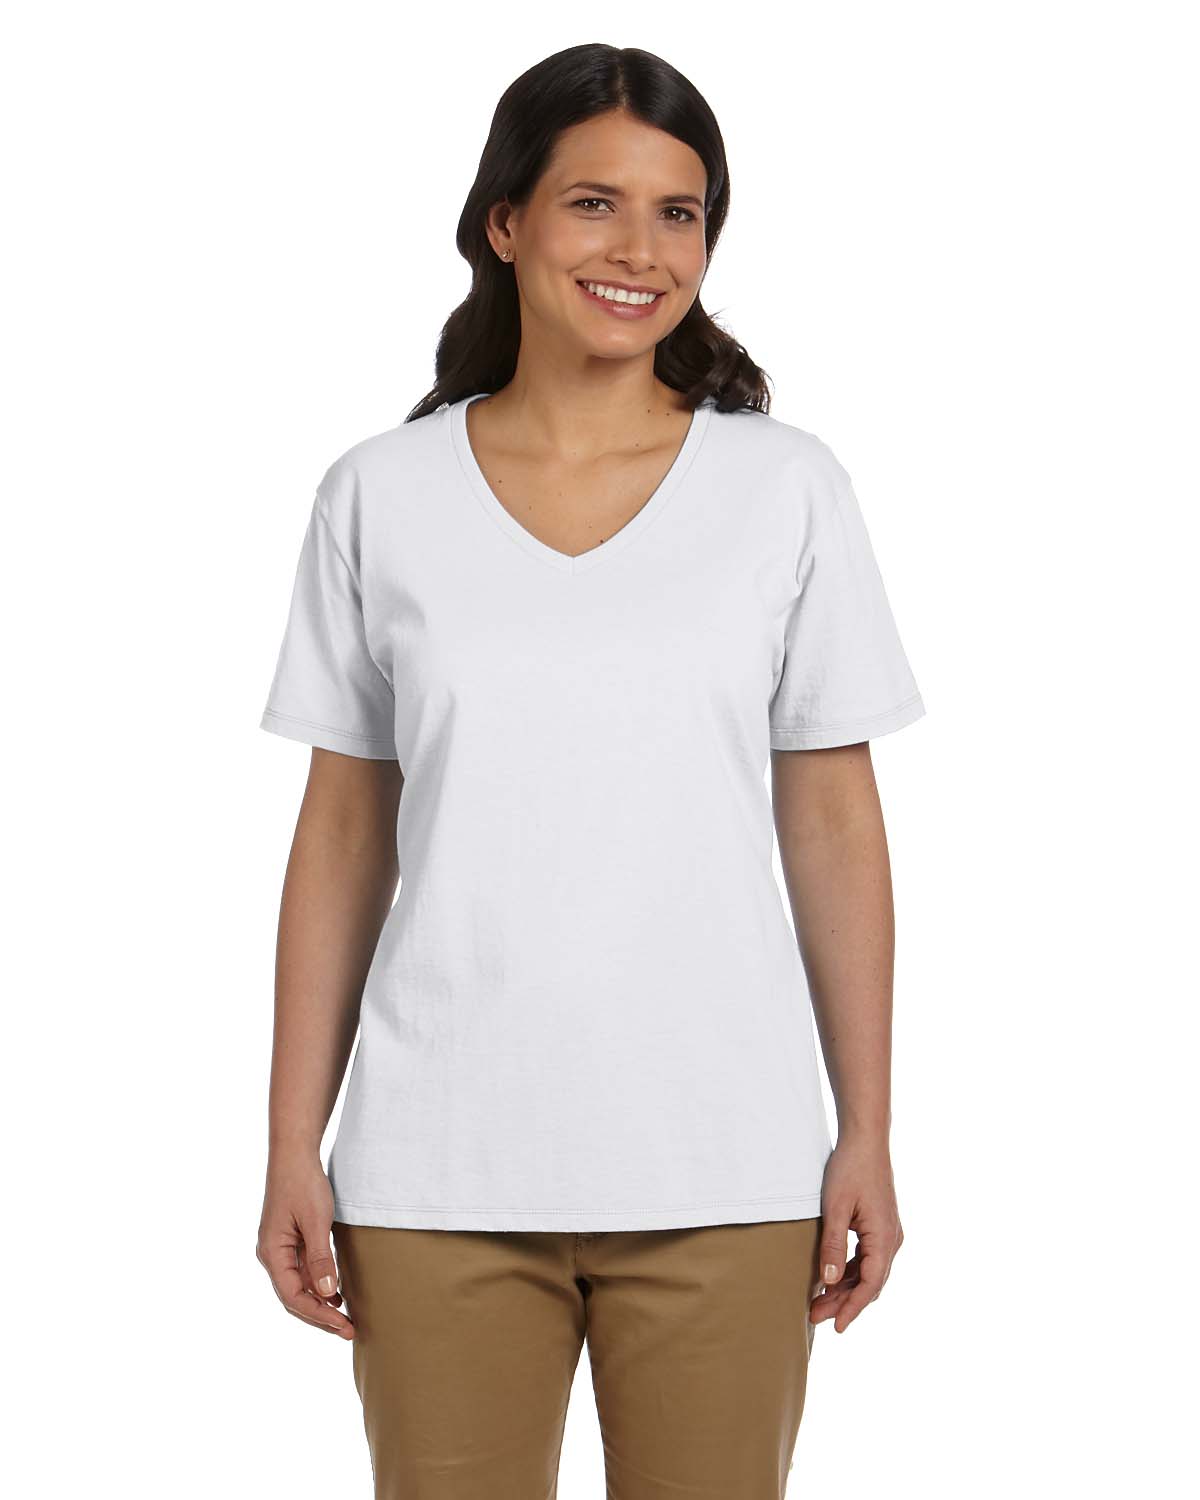 Hanes 5780 Women's ComfortSoft V-Neck Cotton T-Shirt - Shirtmax